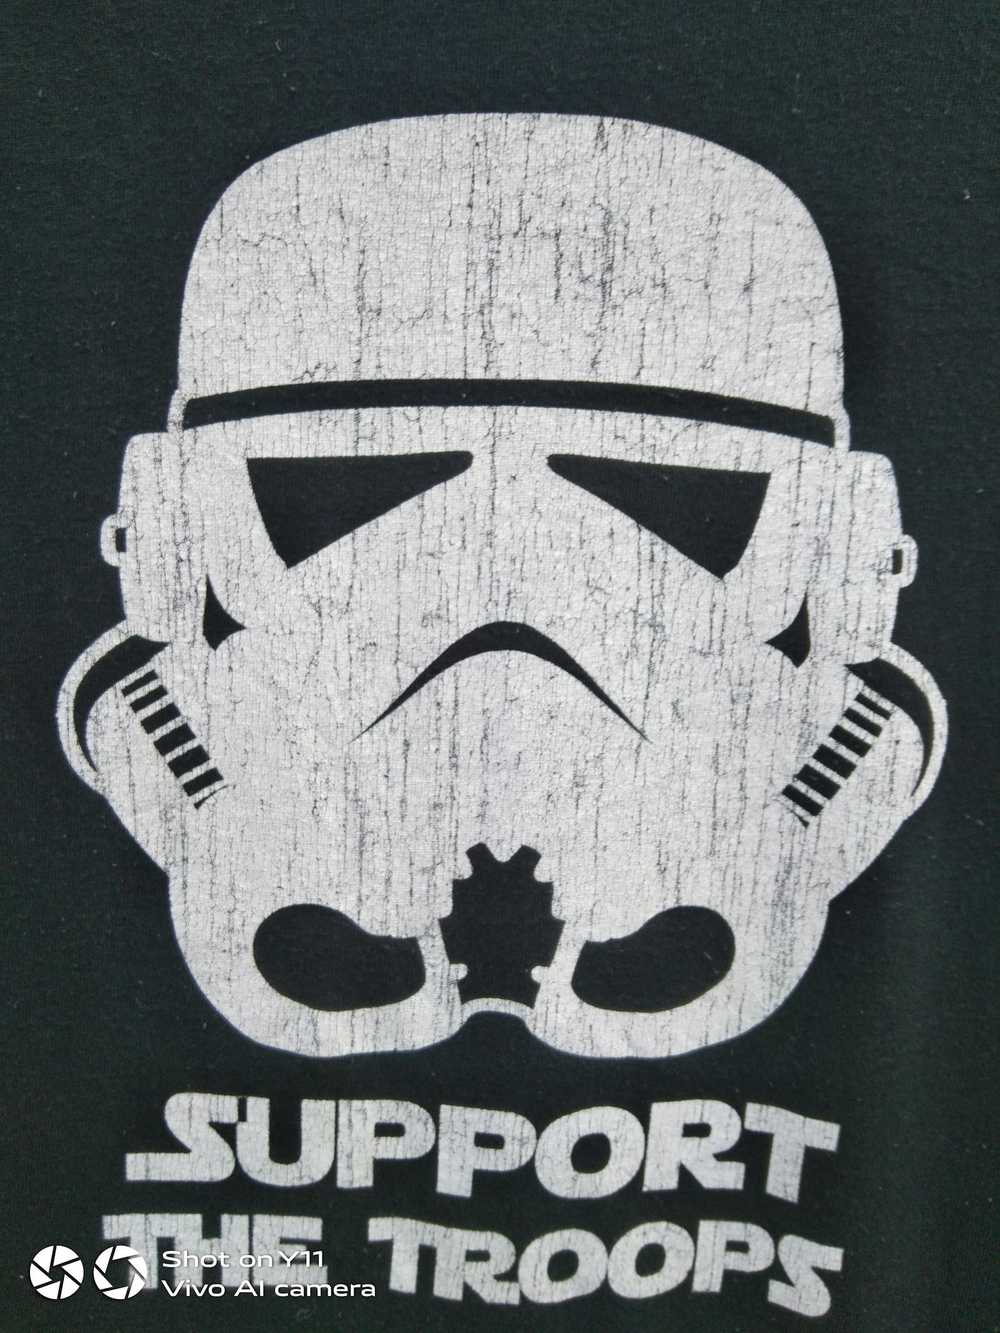 Gildan × Star Wars Tee big logo support the troops - image 5